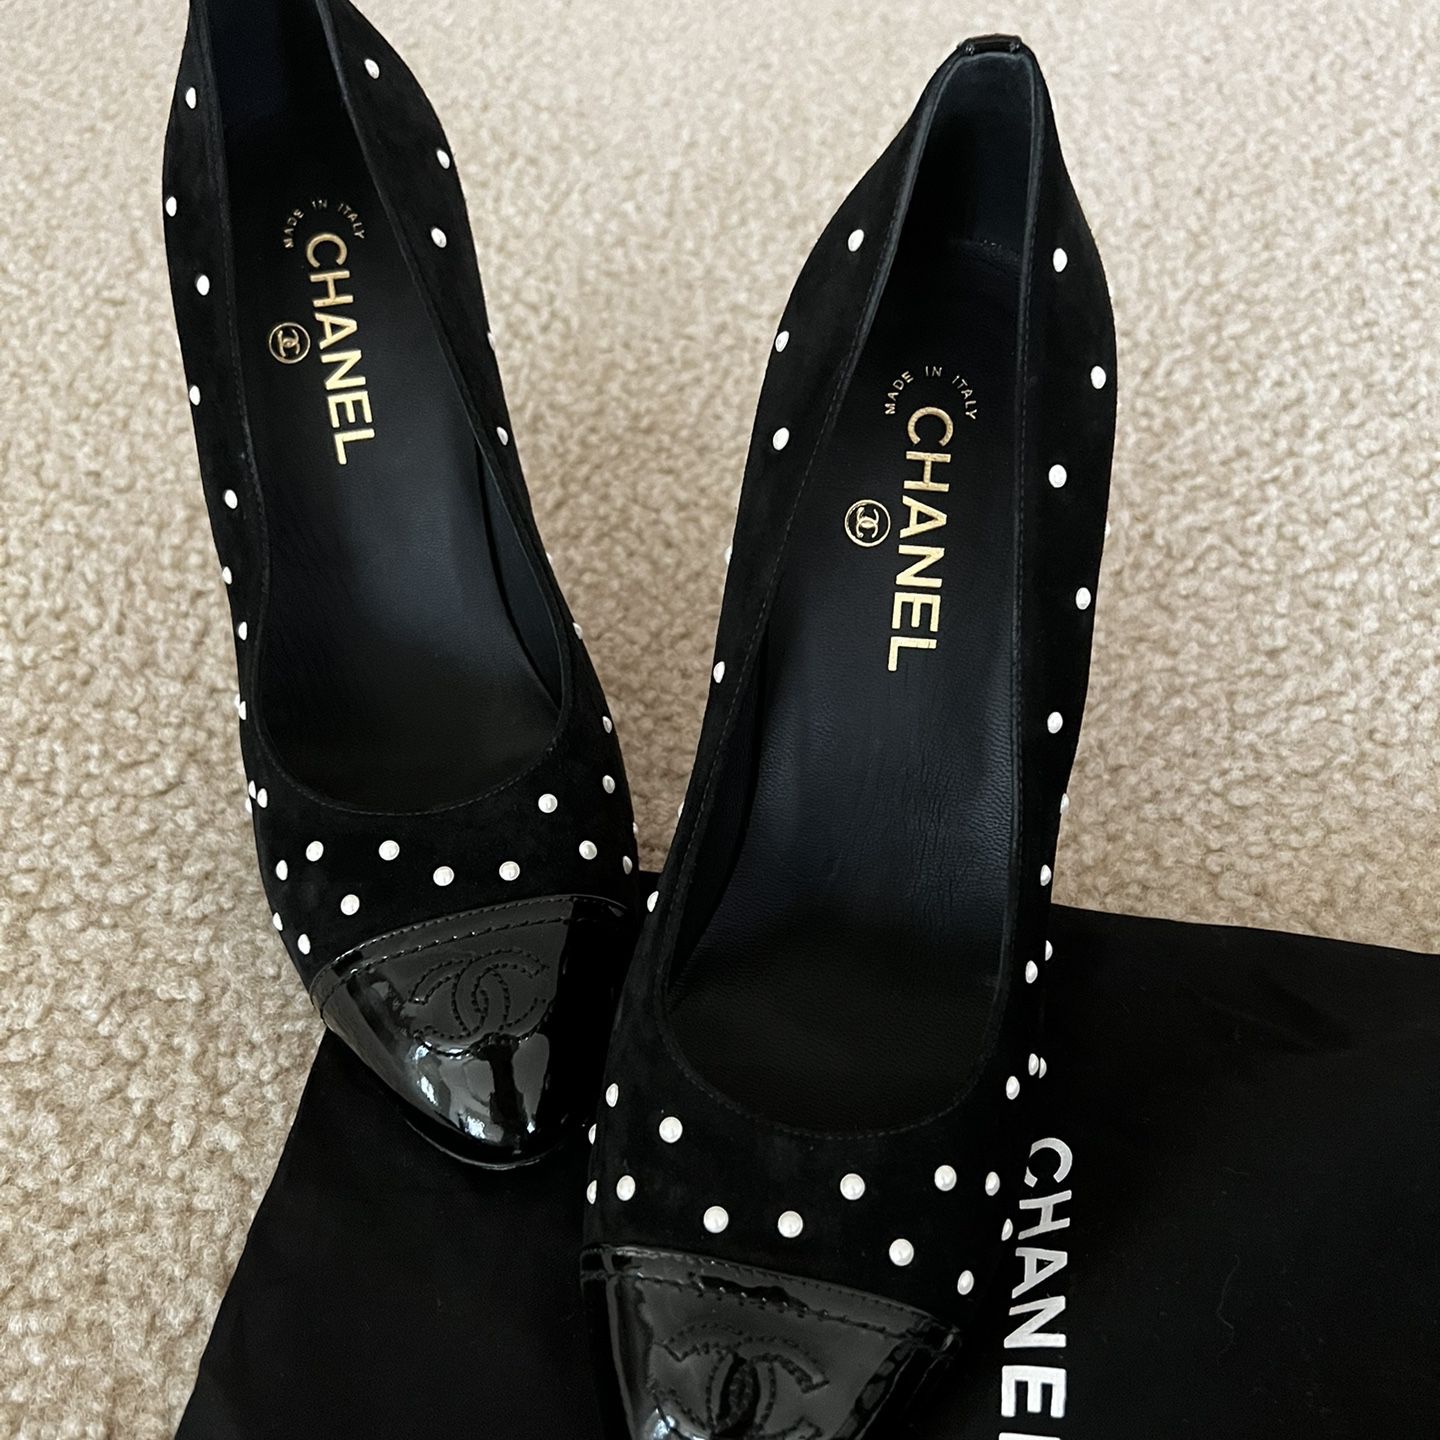 Chanel Heels Size 41C for Sale in Glenelg, MD - OfferUp